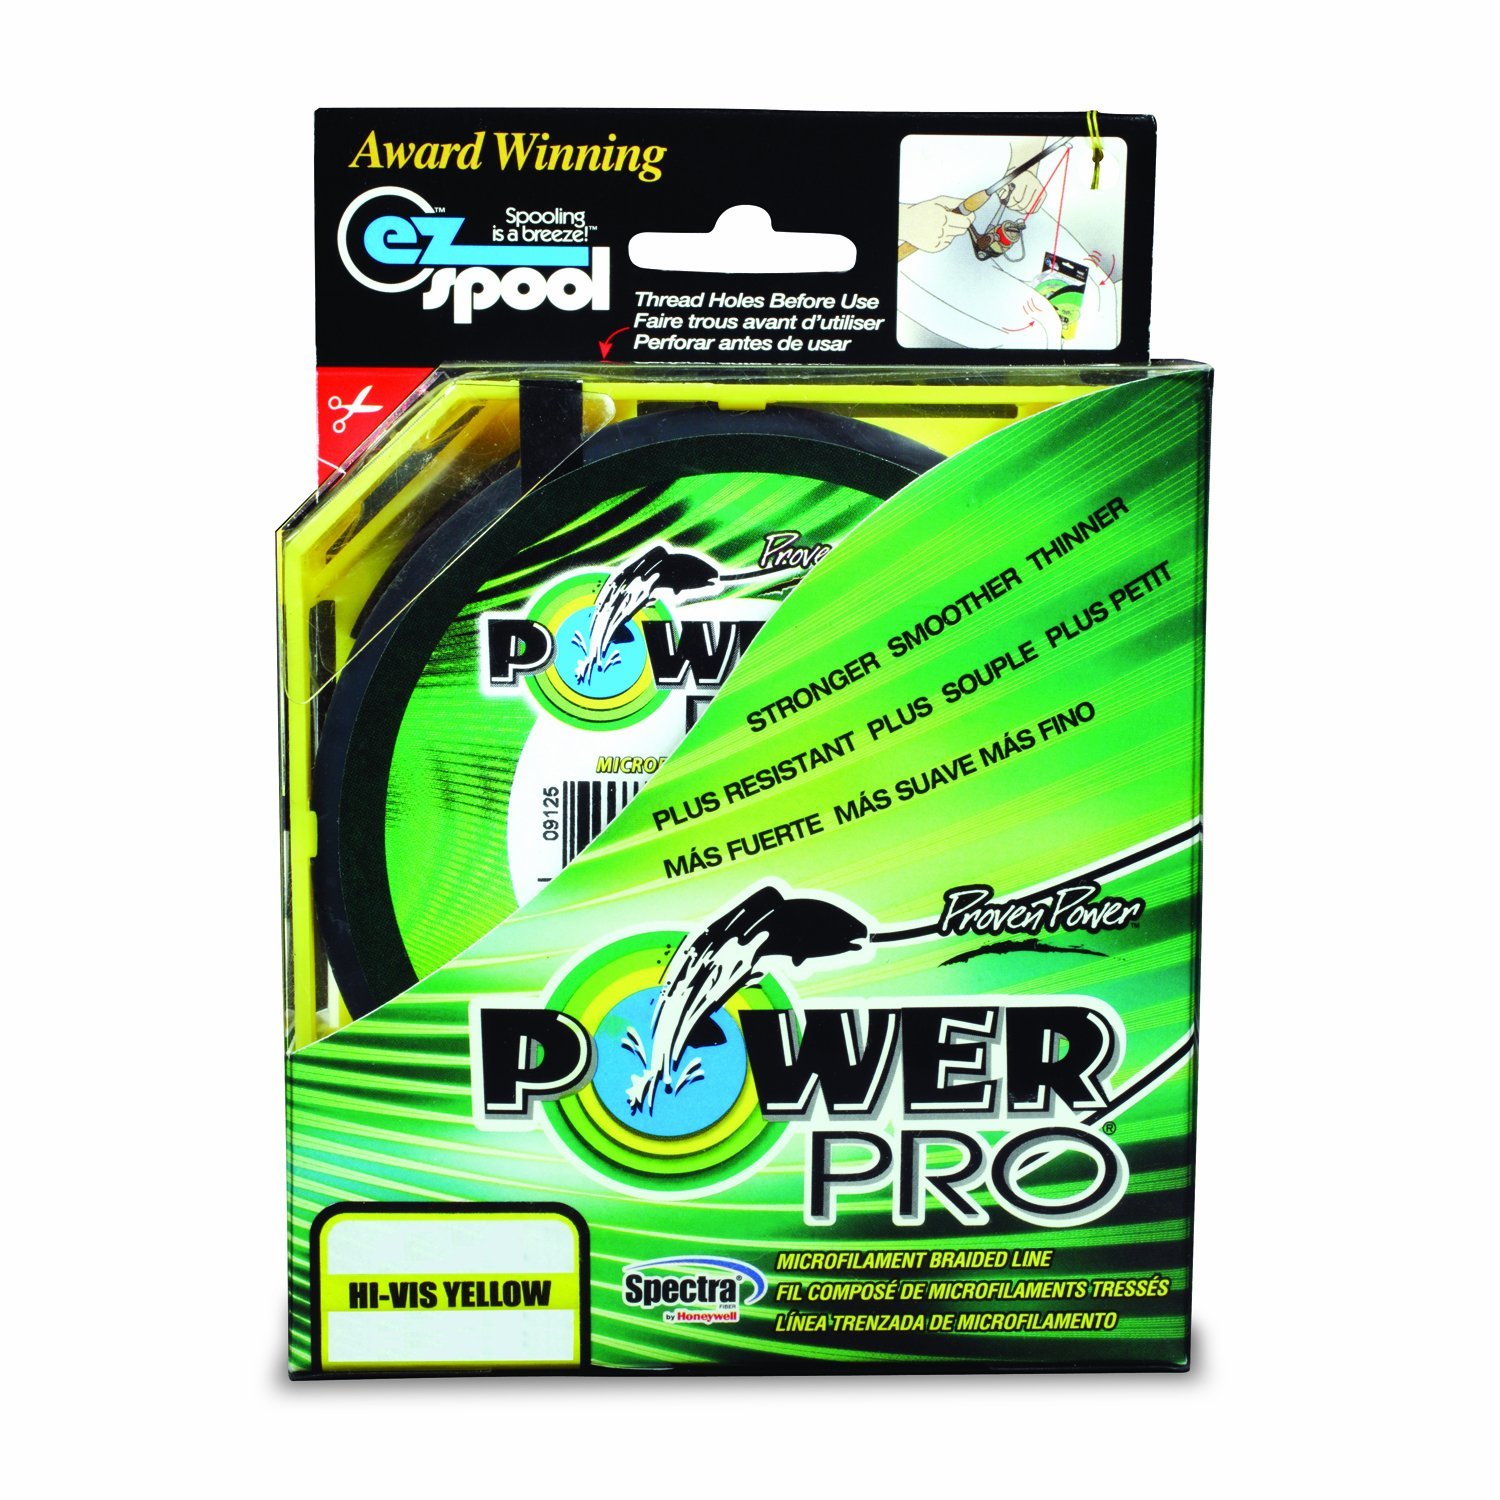 Power Pro PowerPro Braided Line Hi-Vis Yellow 300 yds. - 10 lb. Test